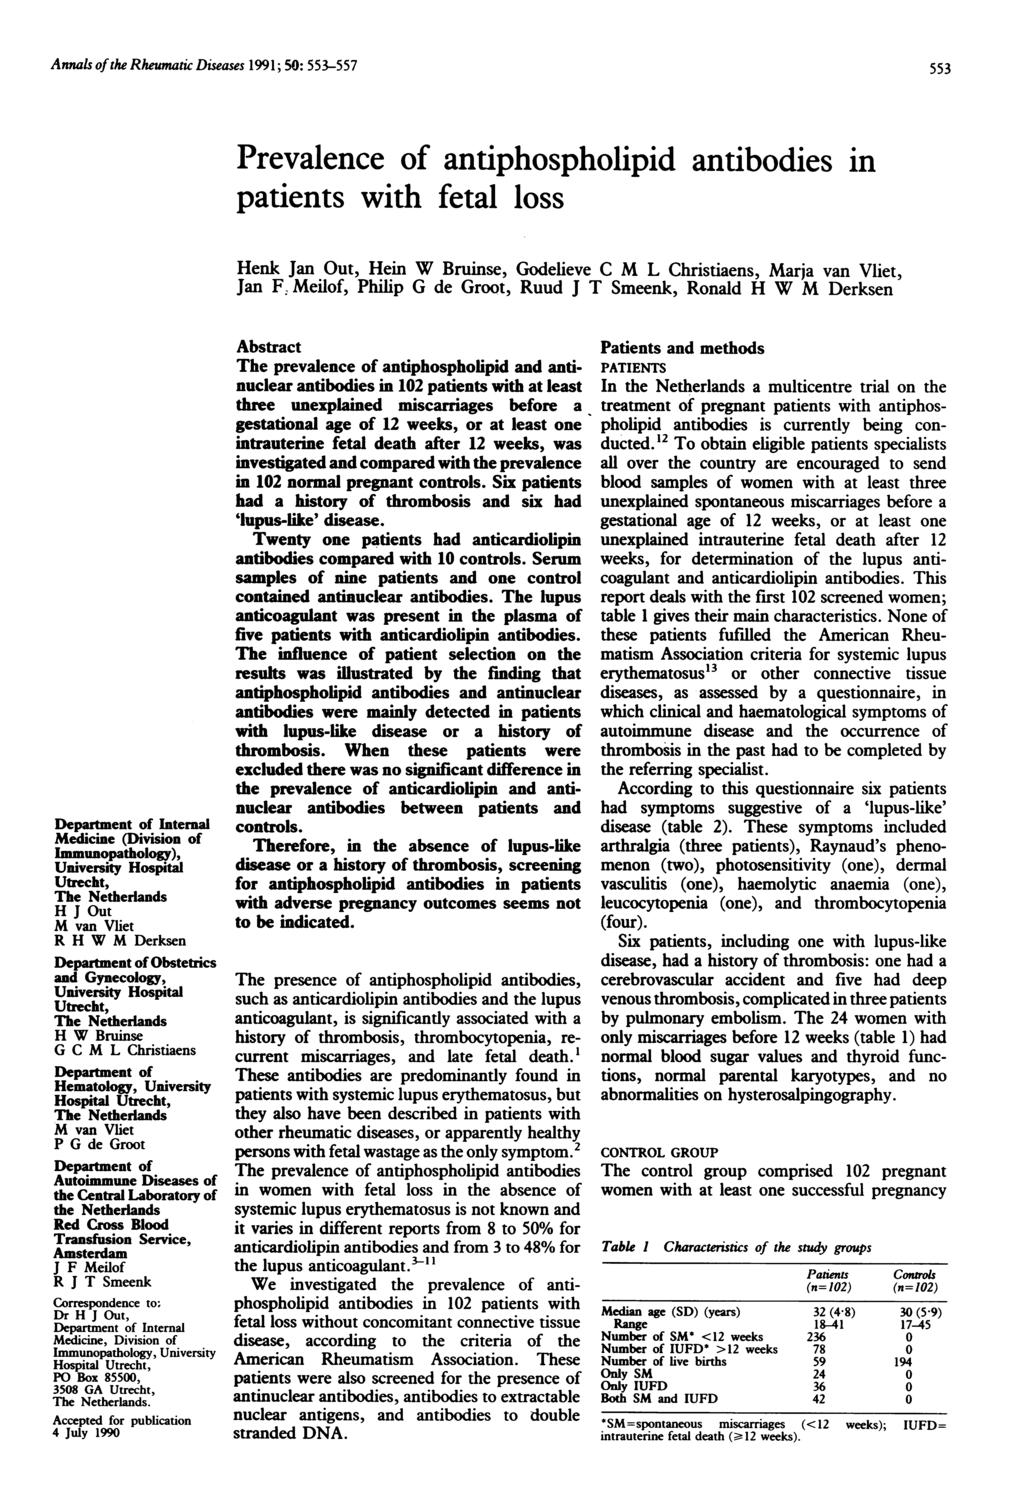 Annals of the Rheumatic Diseases 1991; 50: 553-557 553 Department of Internal Medicine (Division of Immunopathology), University Hospital Utrecht, H J Out M van Vliet R H W M Derksen Department of